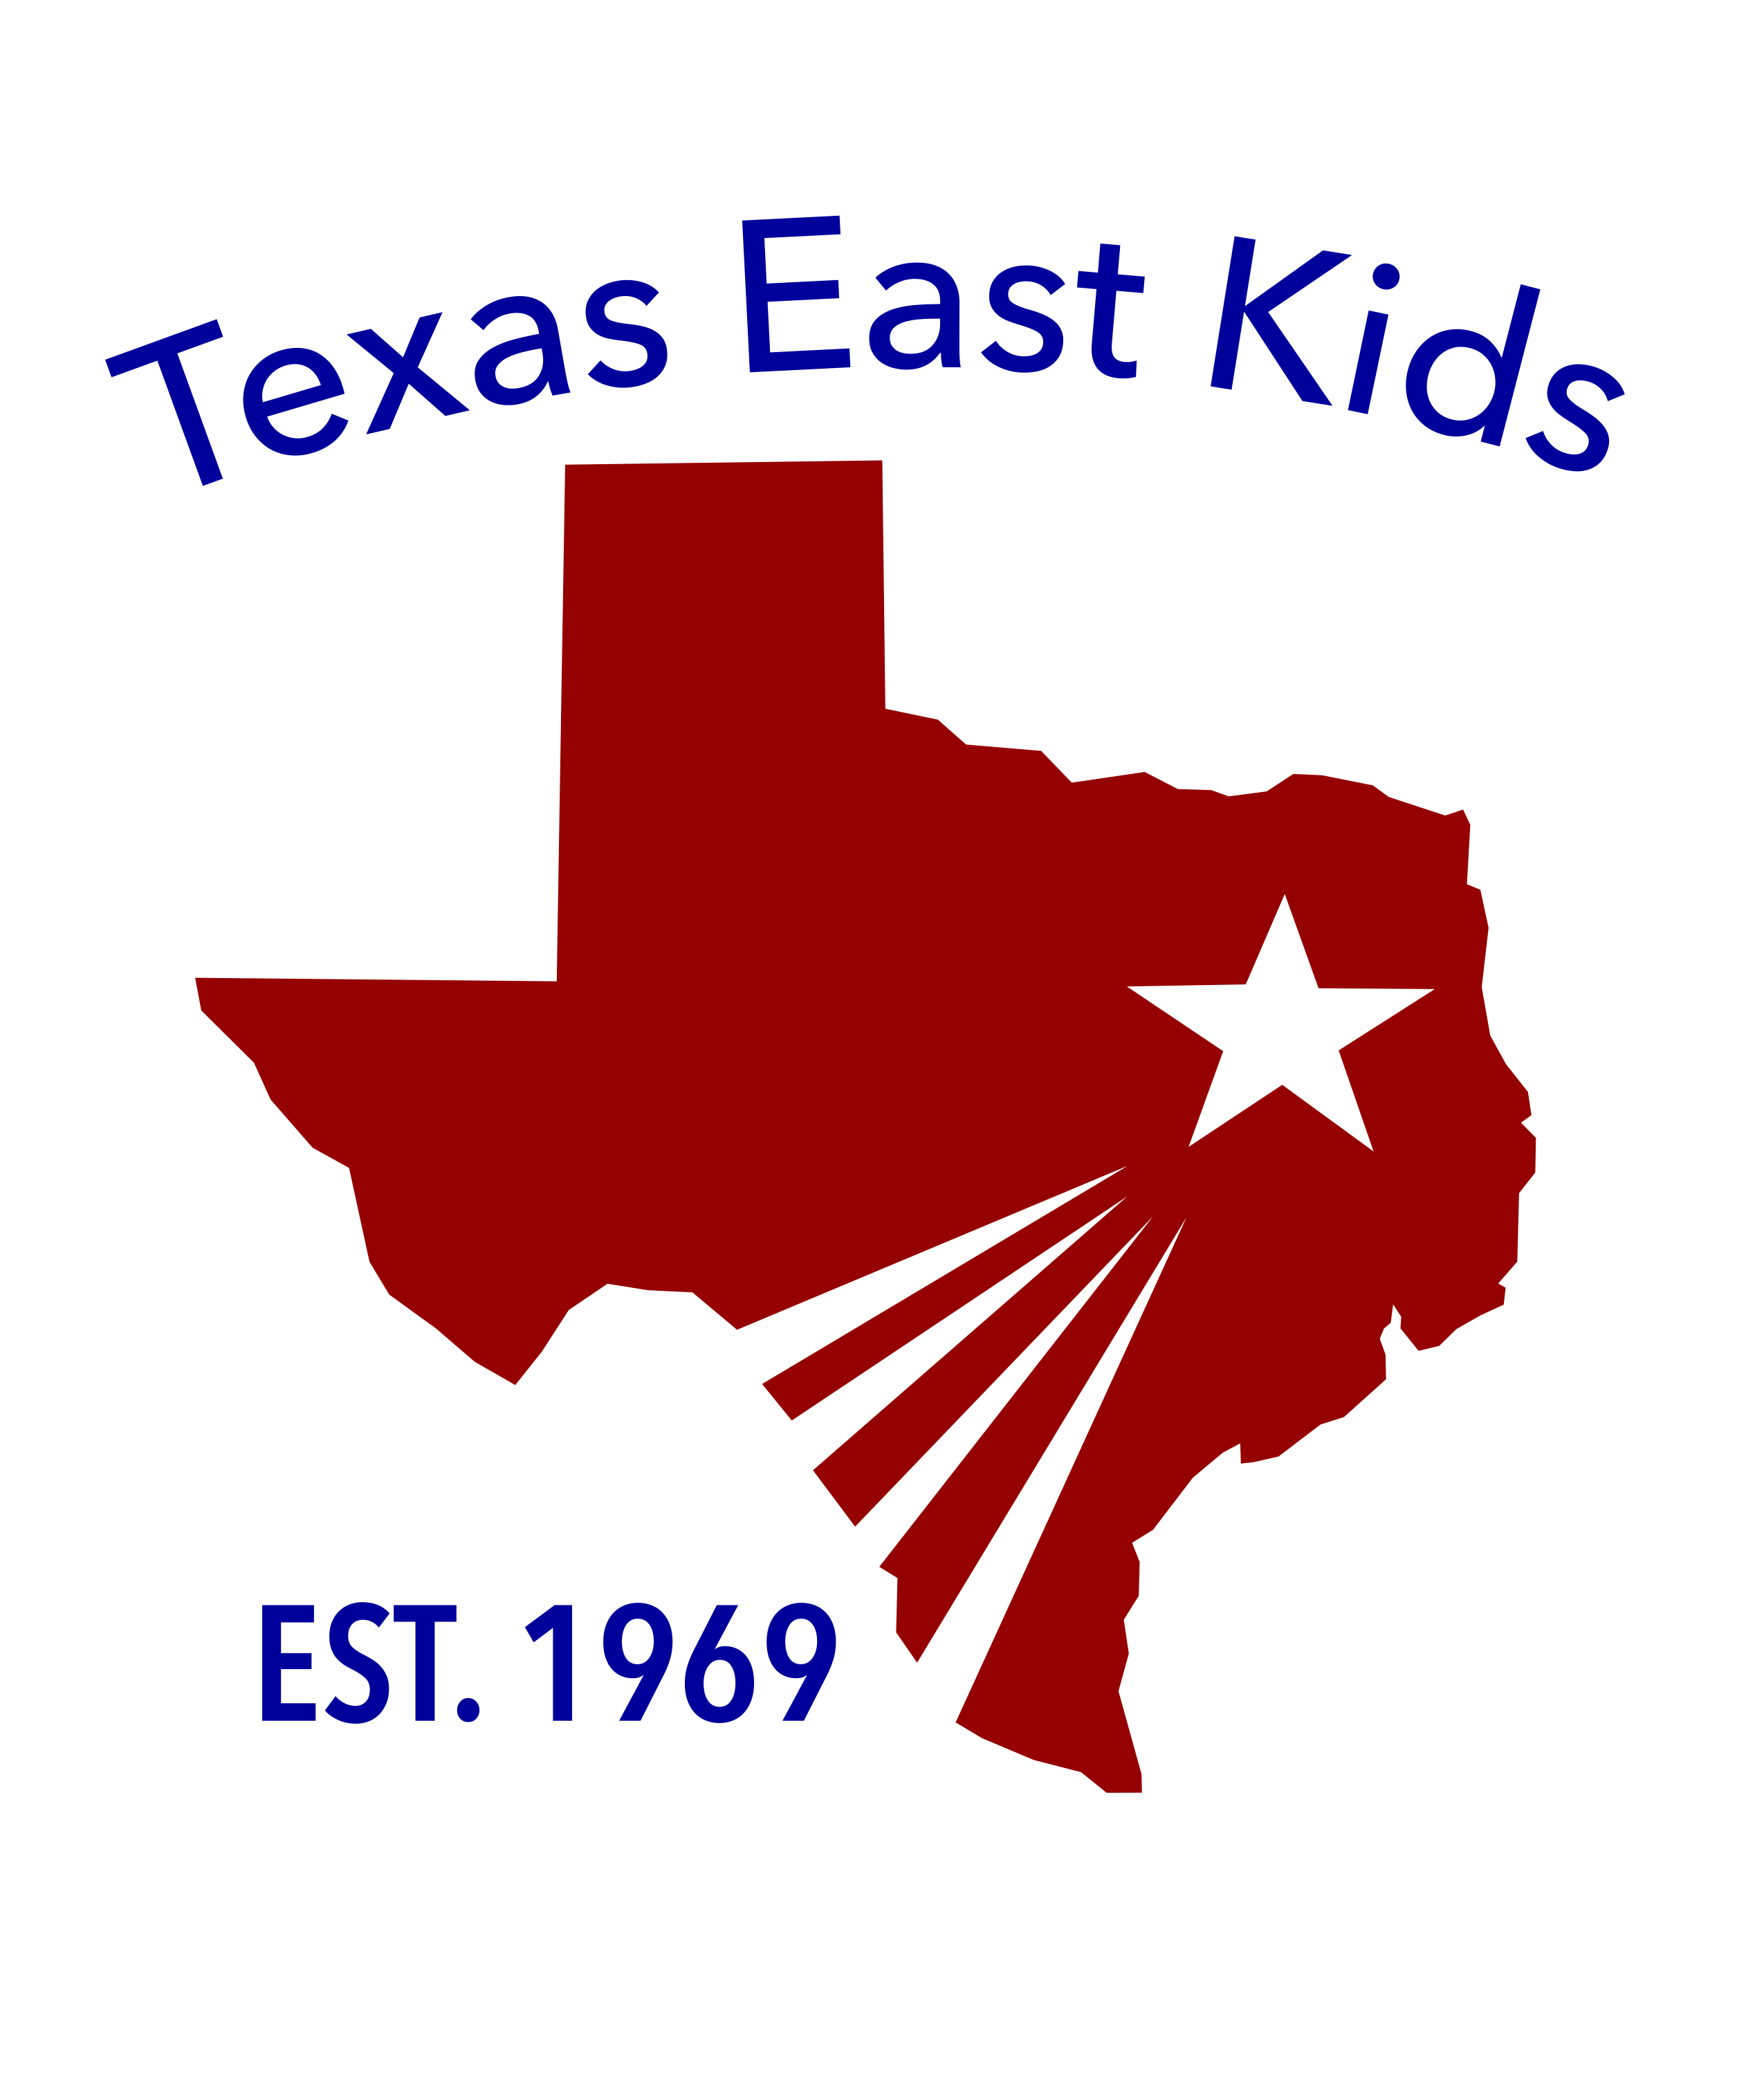 Texas East Kids